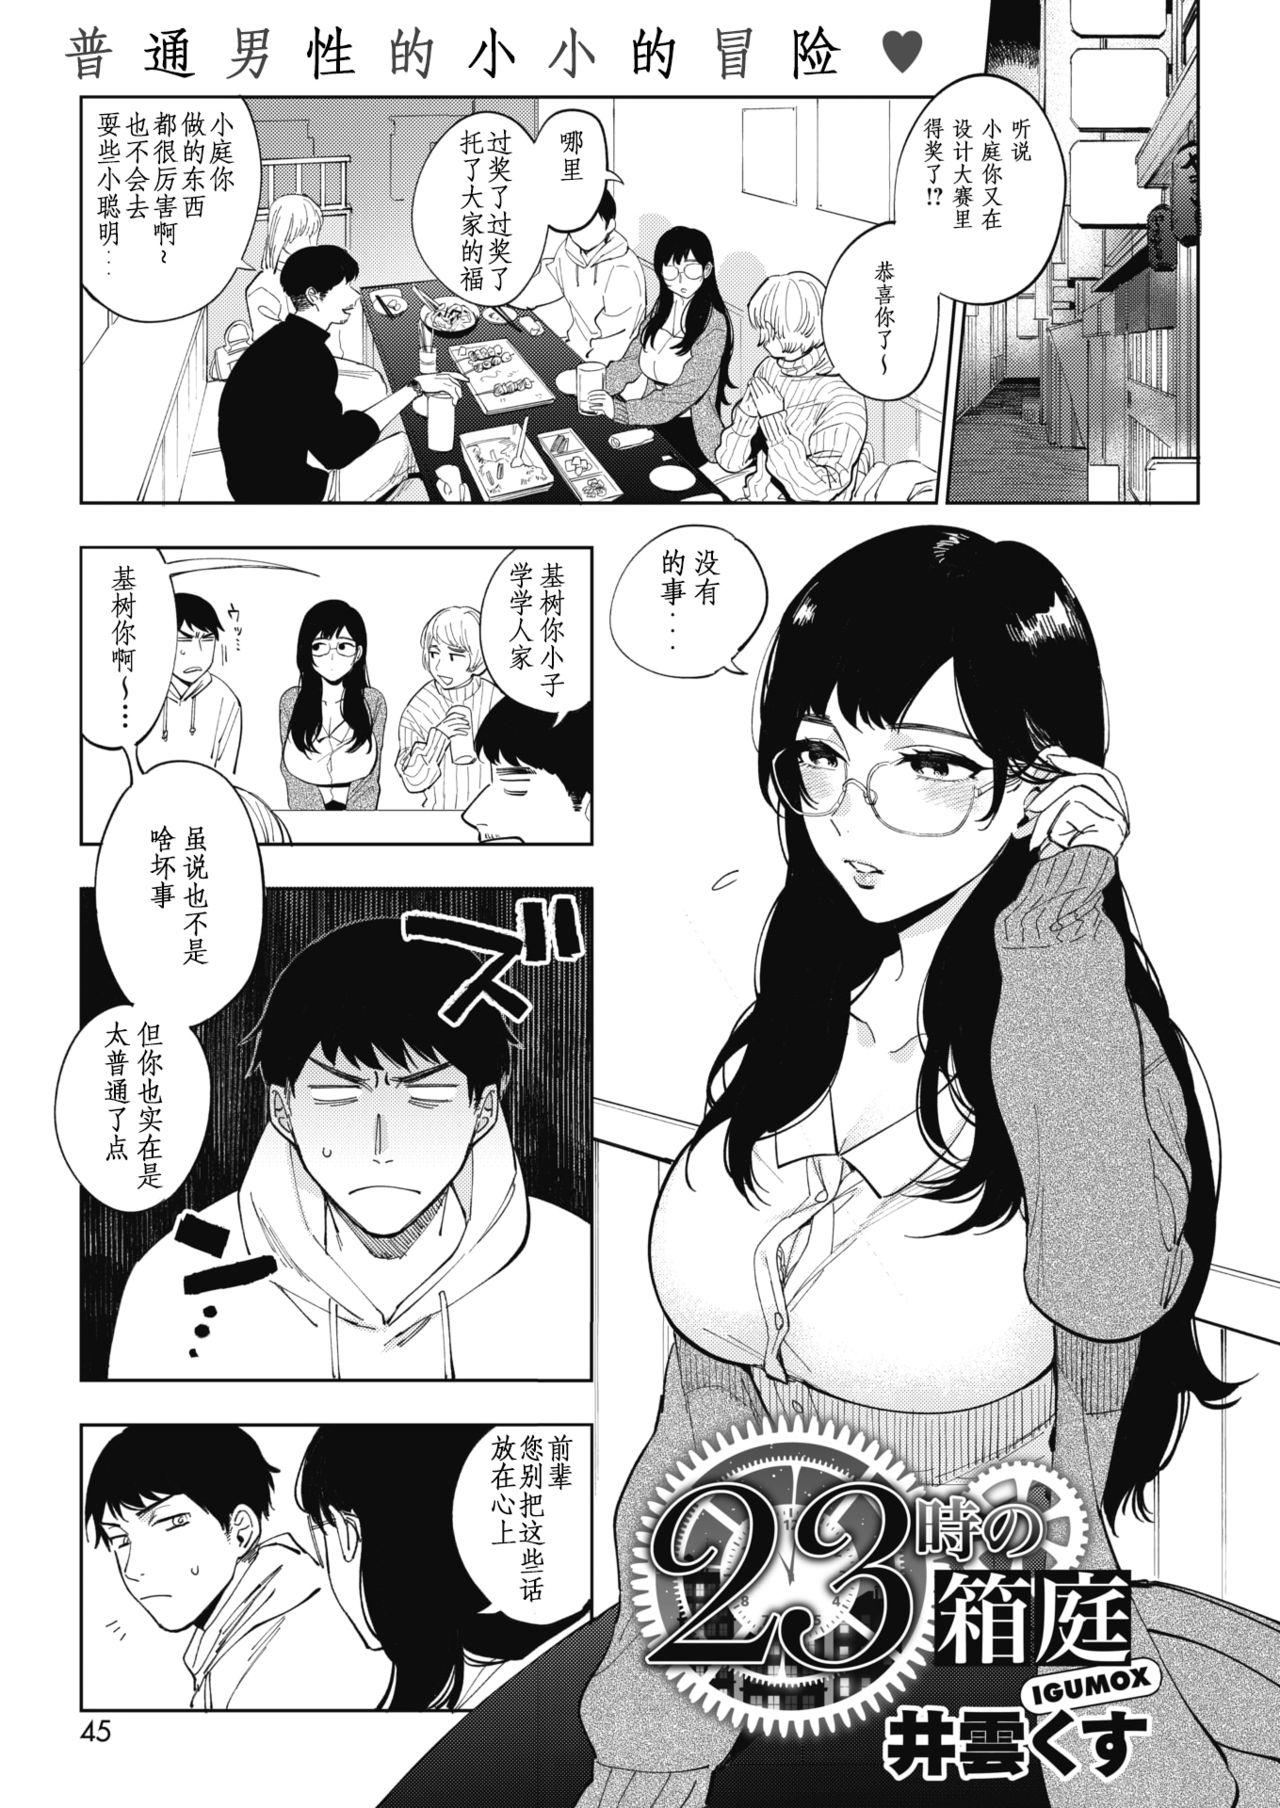 Boobies 23-ji no Hakoniwa Pendeja - Page 1